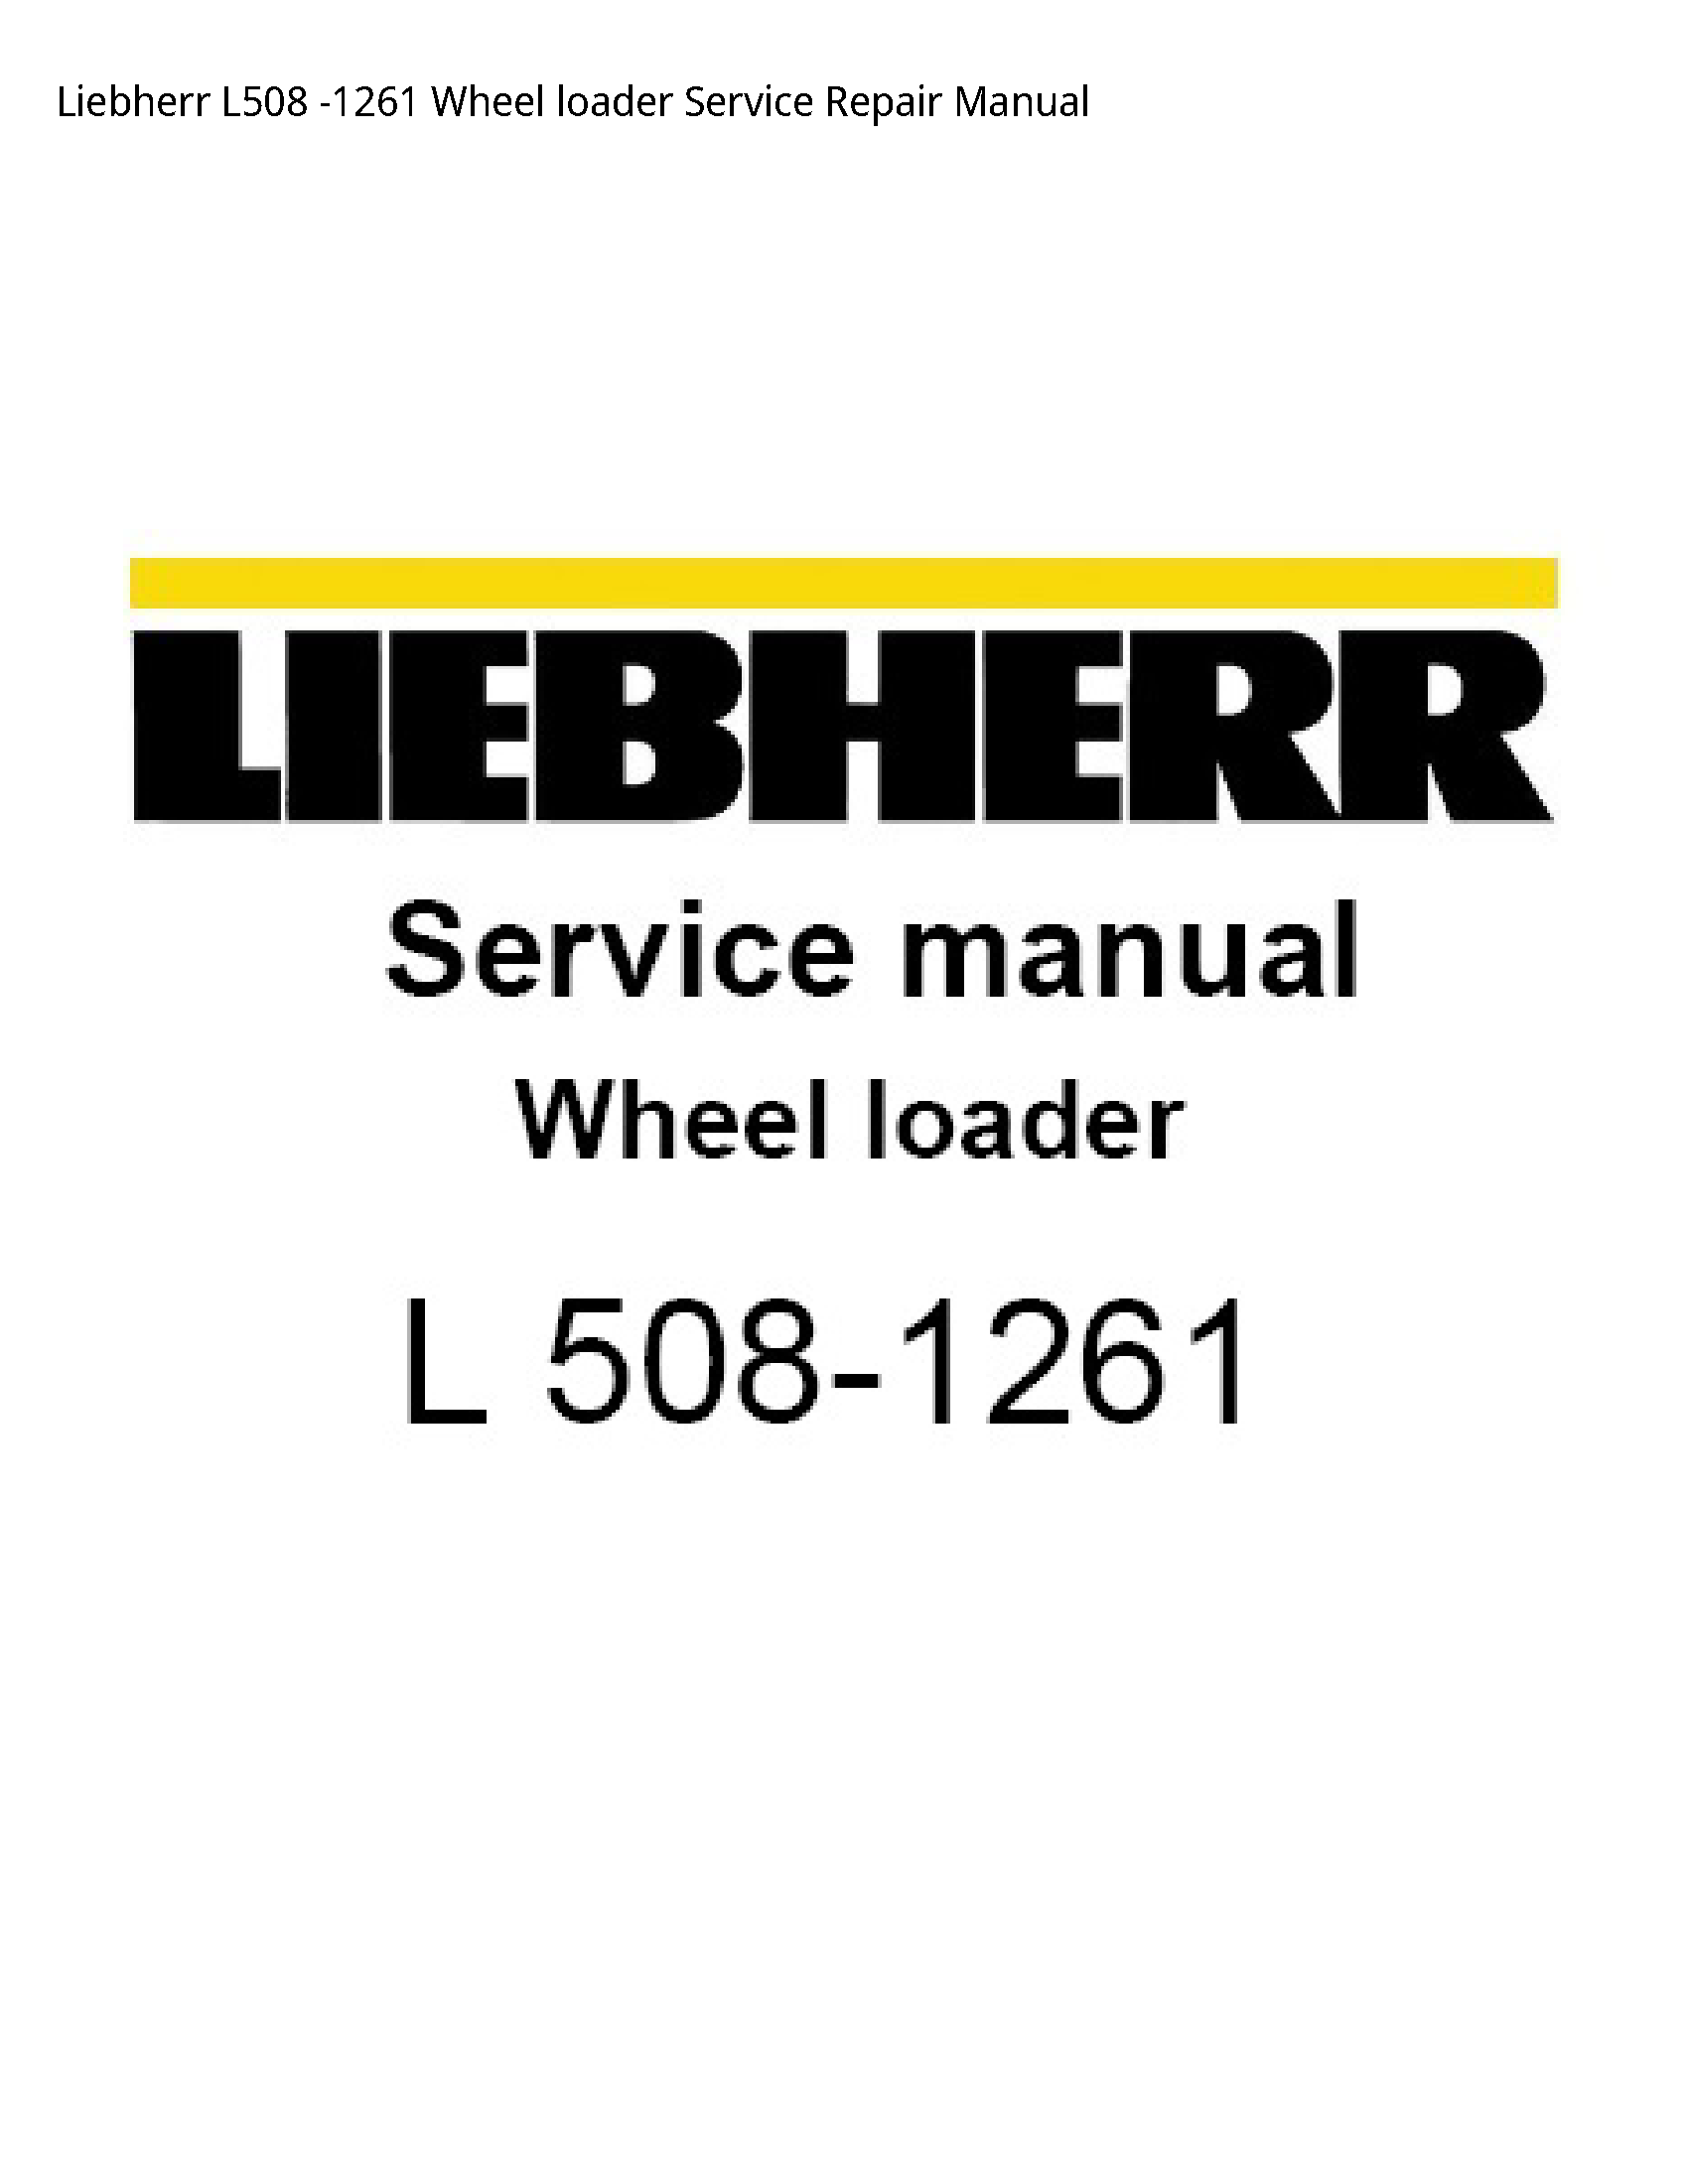 Liebherr L508 Wheel loader manual